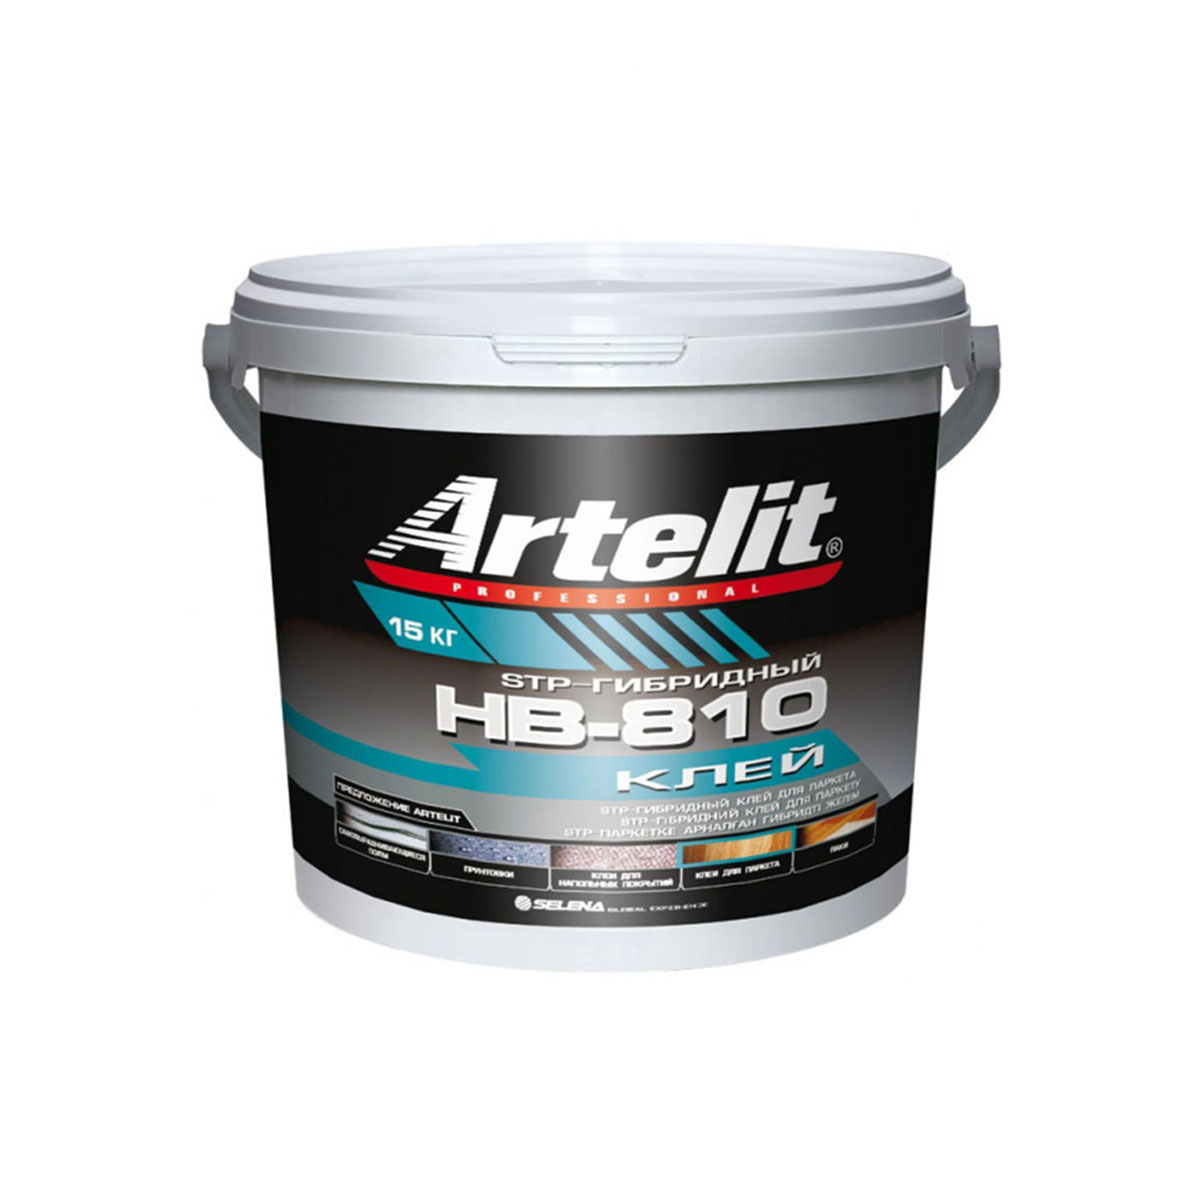 Artelit HB 810 STP    